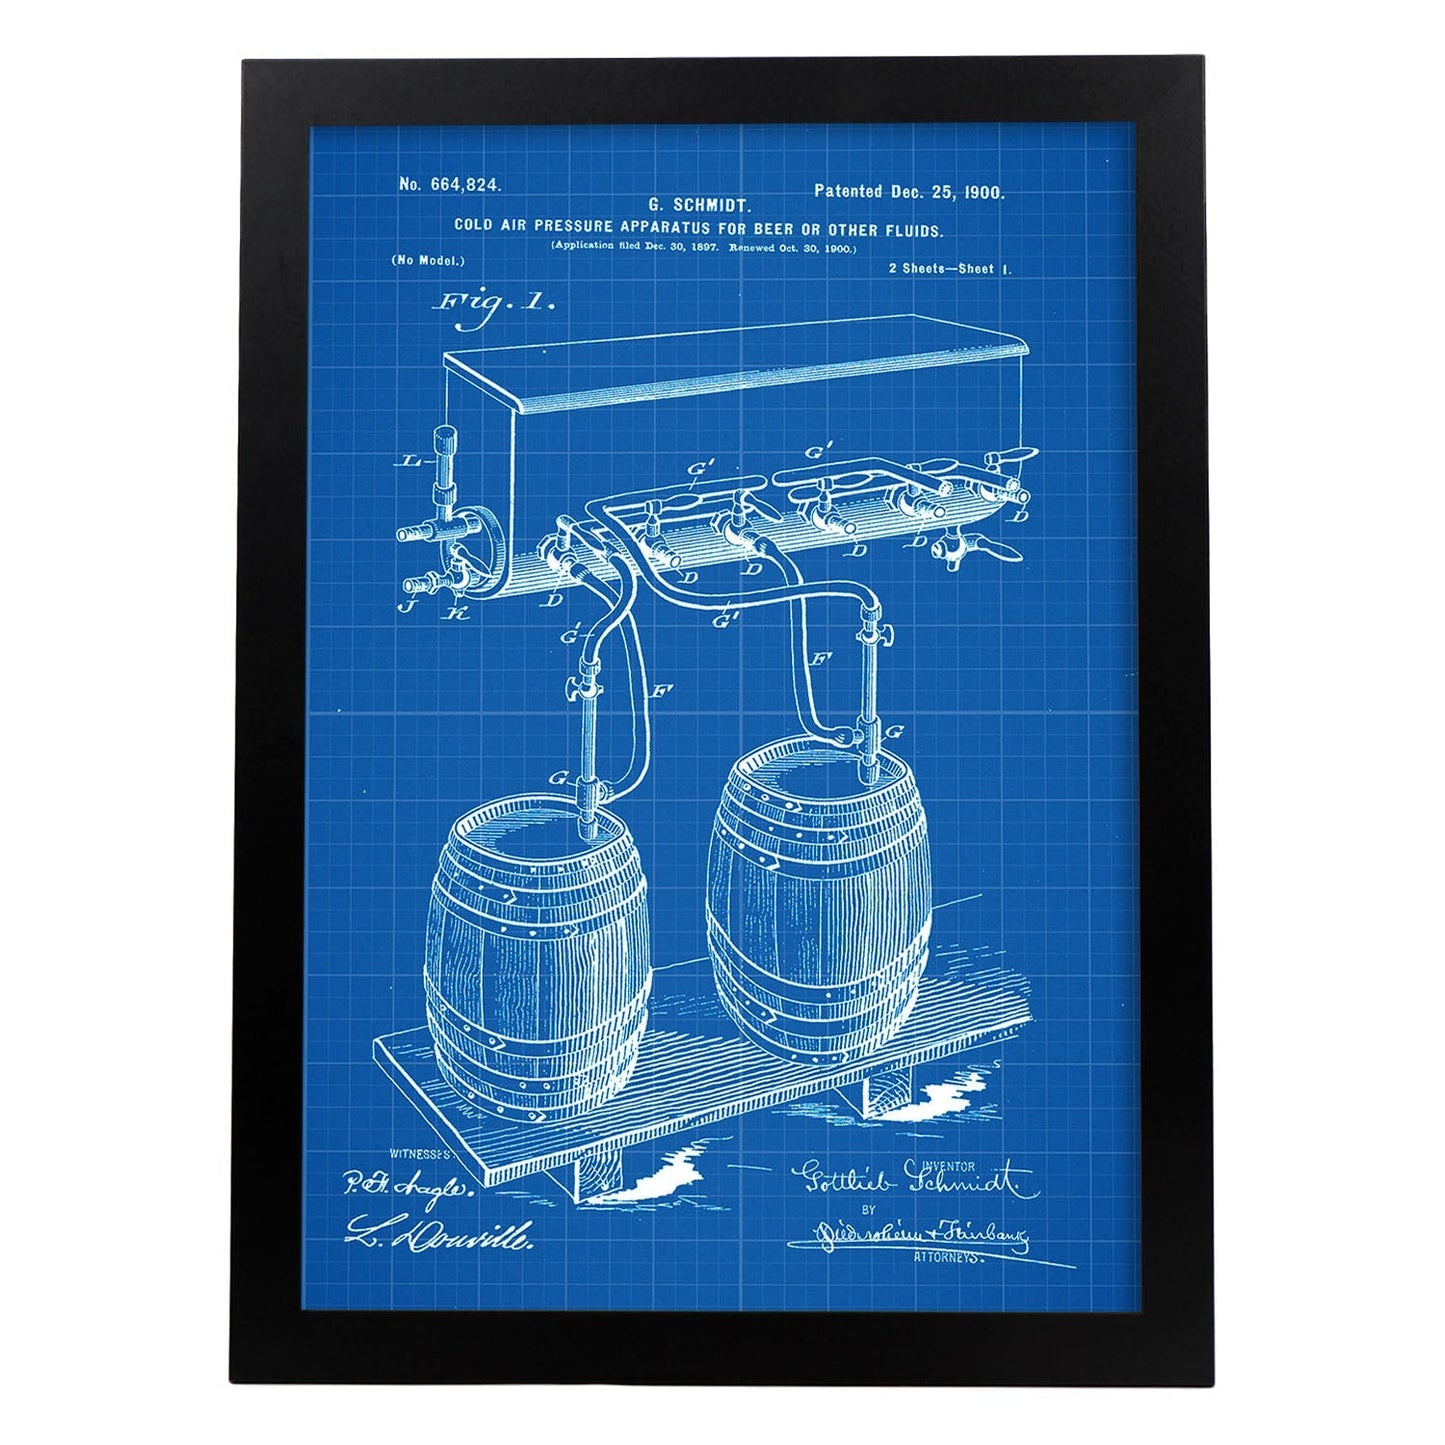 Poster con patente de Presion cerveza. Lámina con diseño de patente antigua-Artwork-Nacnic-A3-Marco Negro-Nacnic Estudio SL